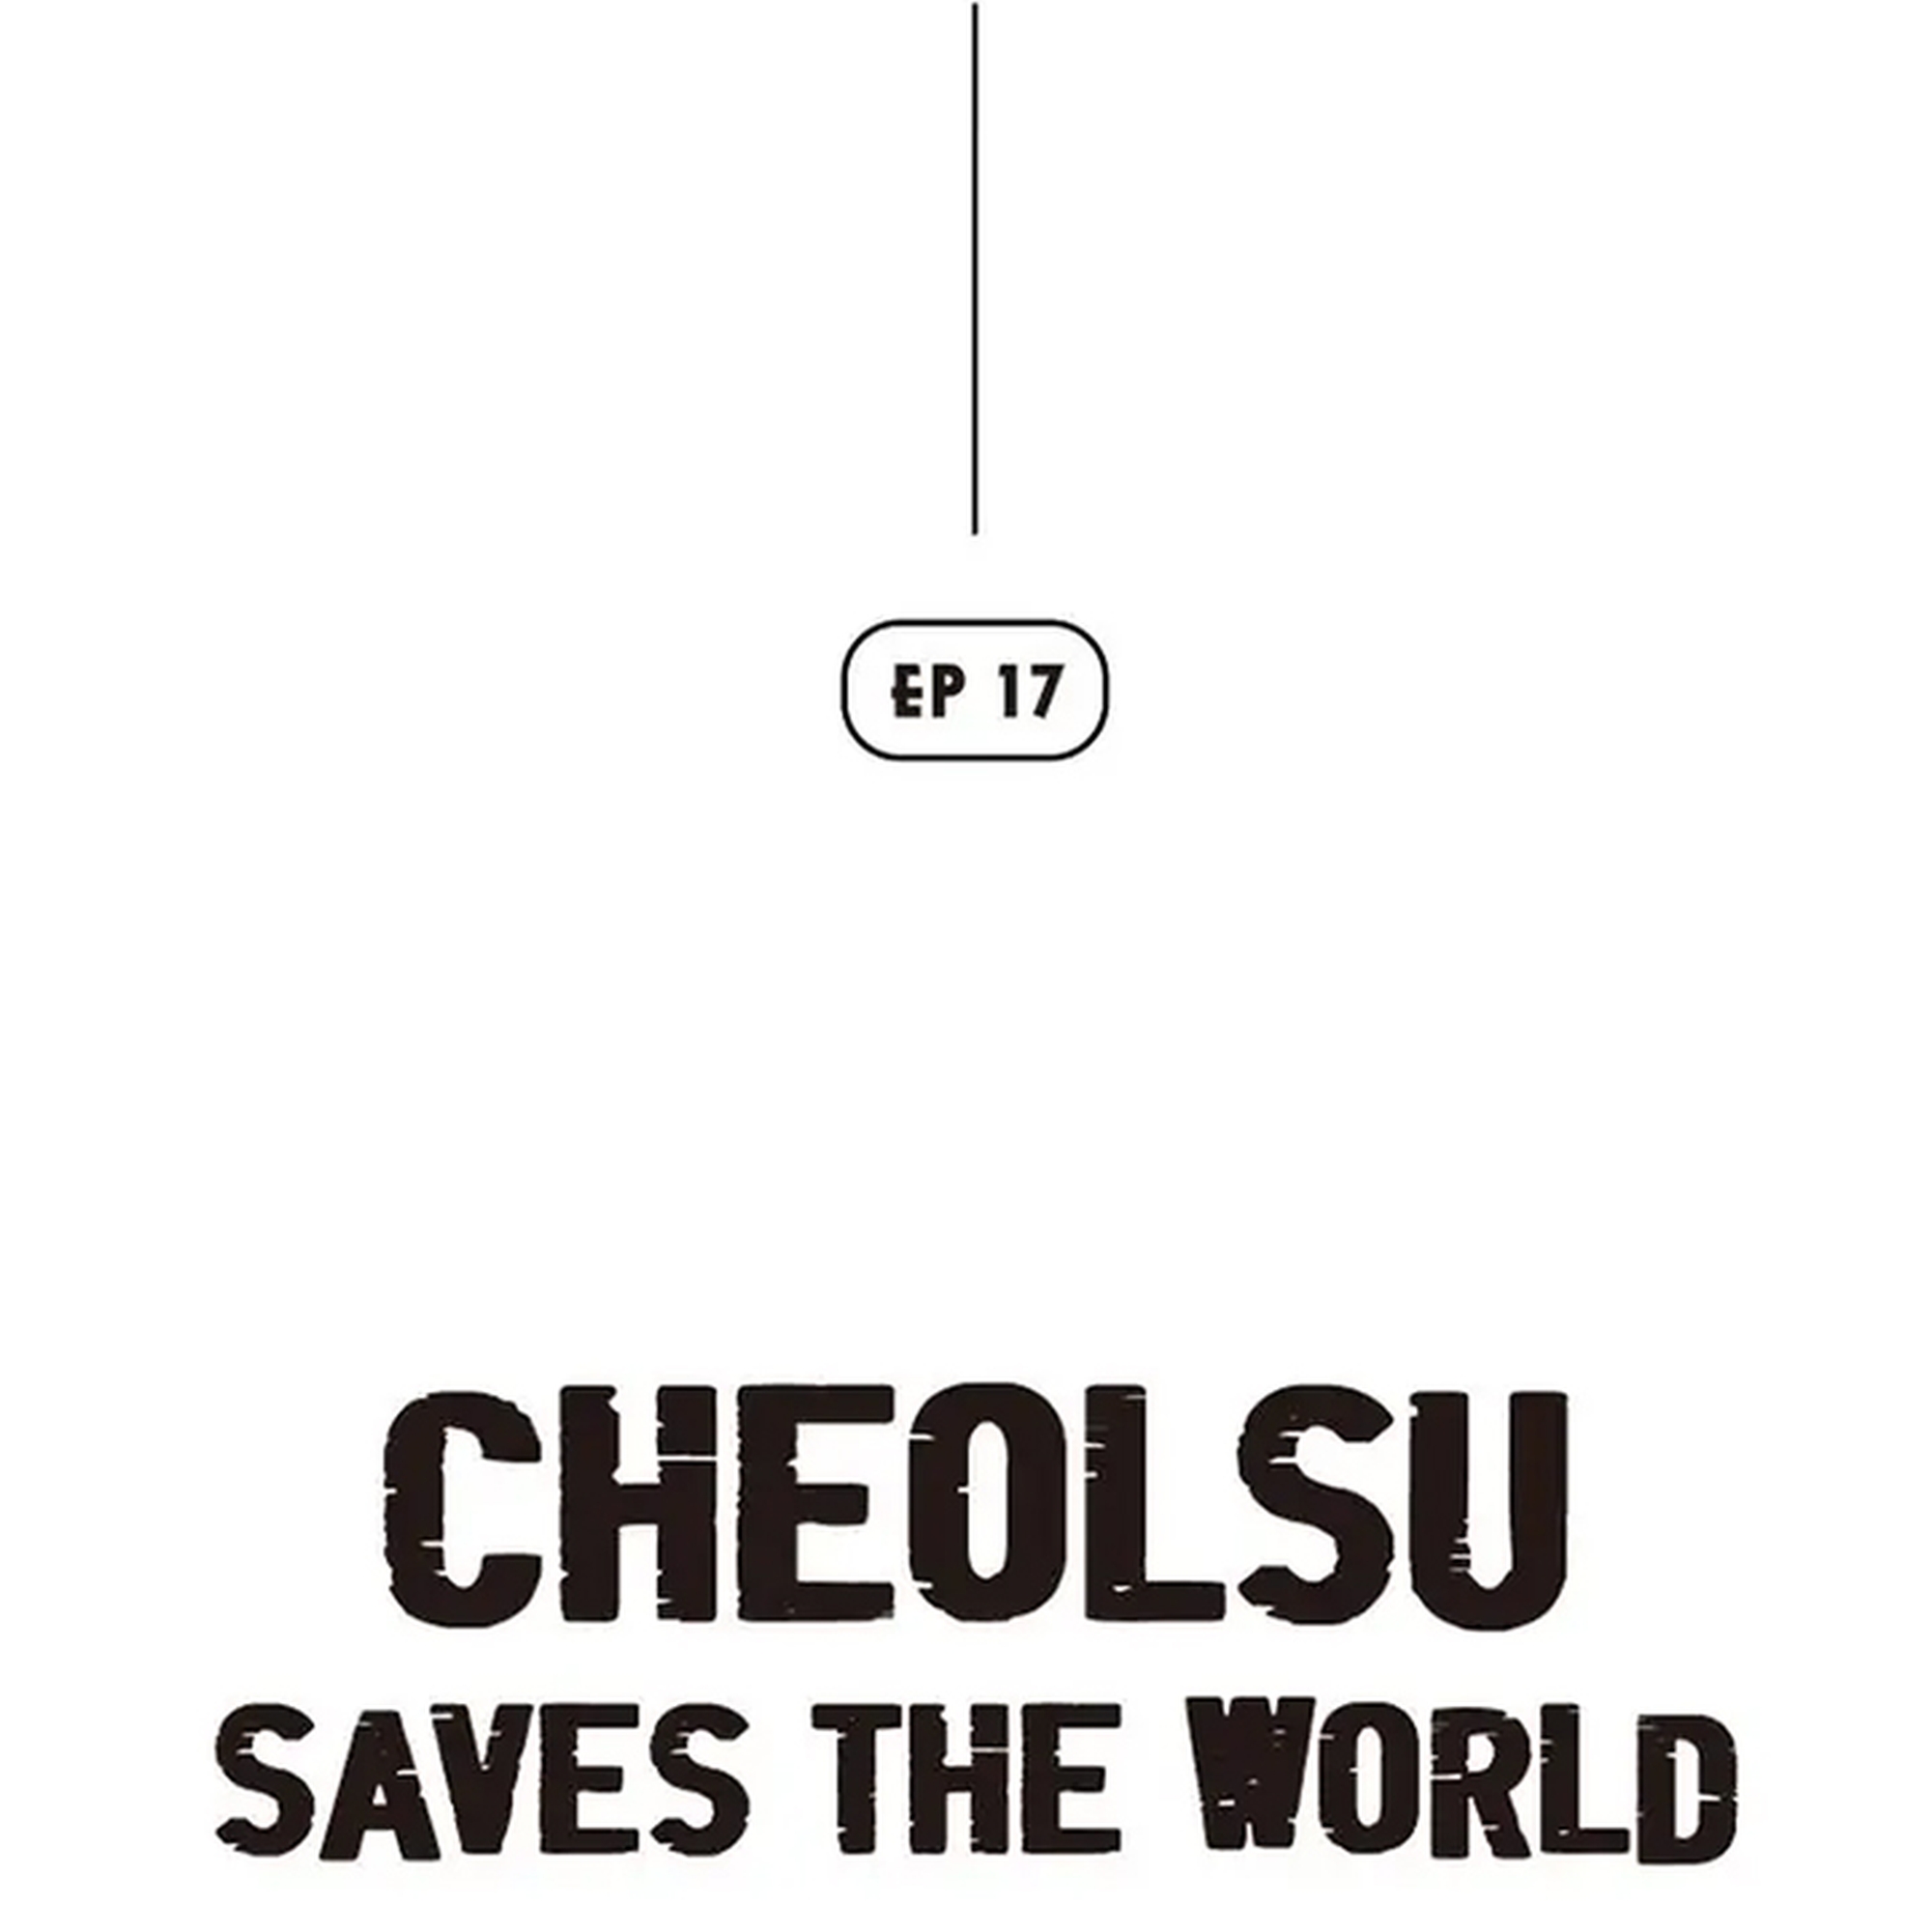 Cheolsu Saves the World Chapter 17